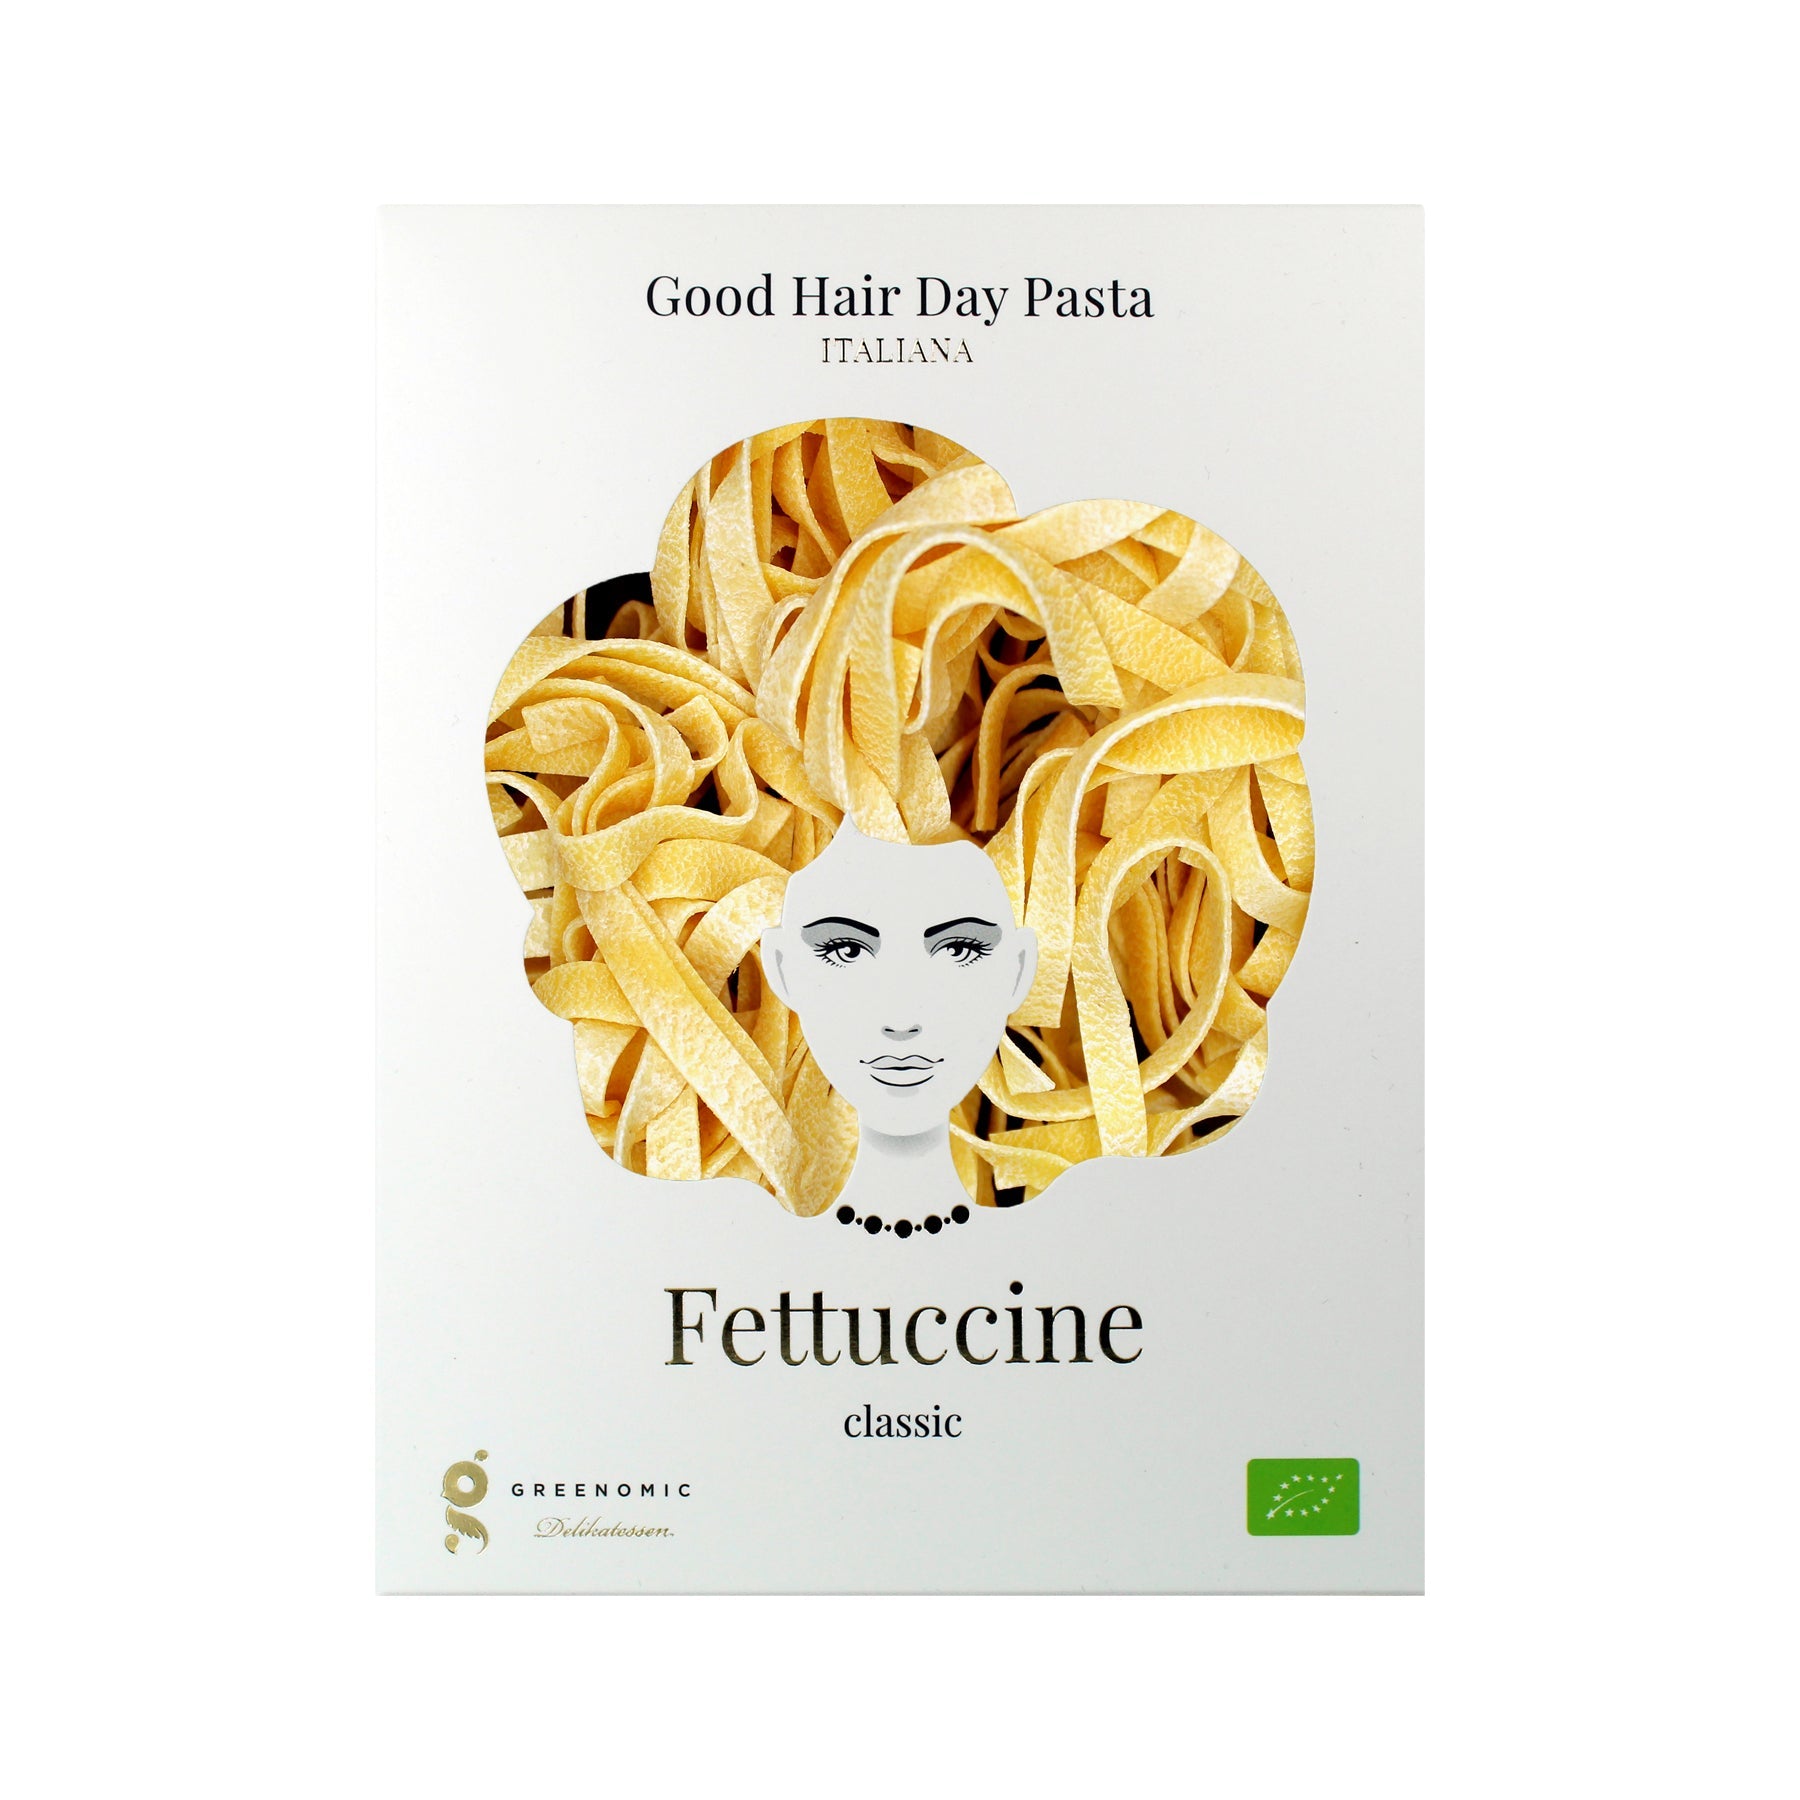 Fettuccine Classic BIO - Good Hair Day Pasta - Genussbote